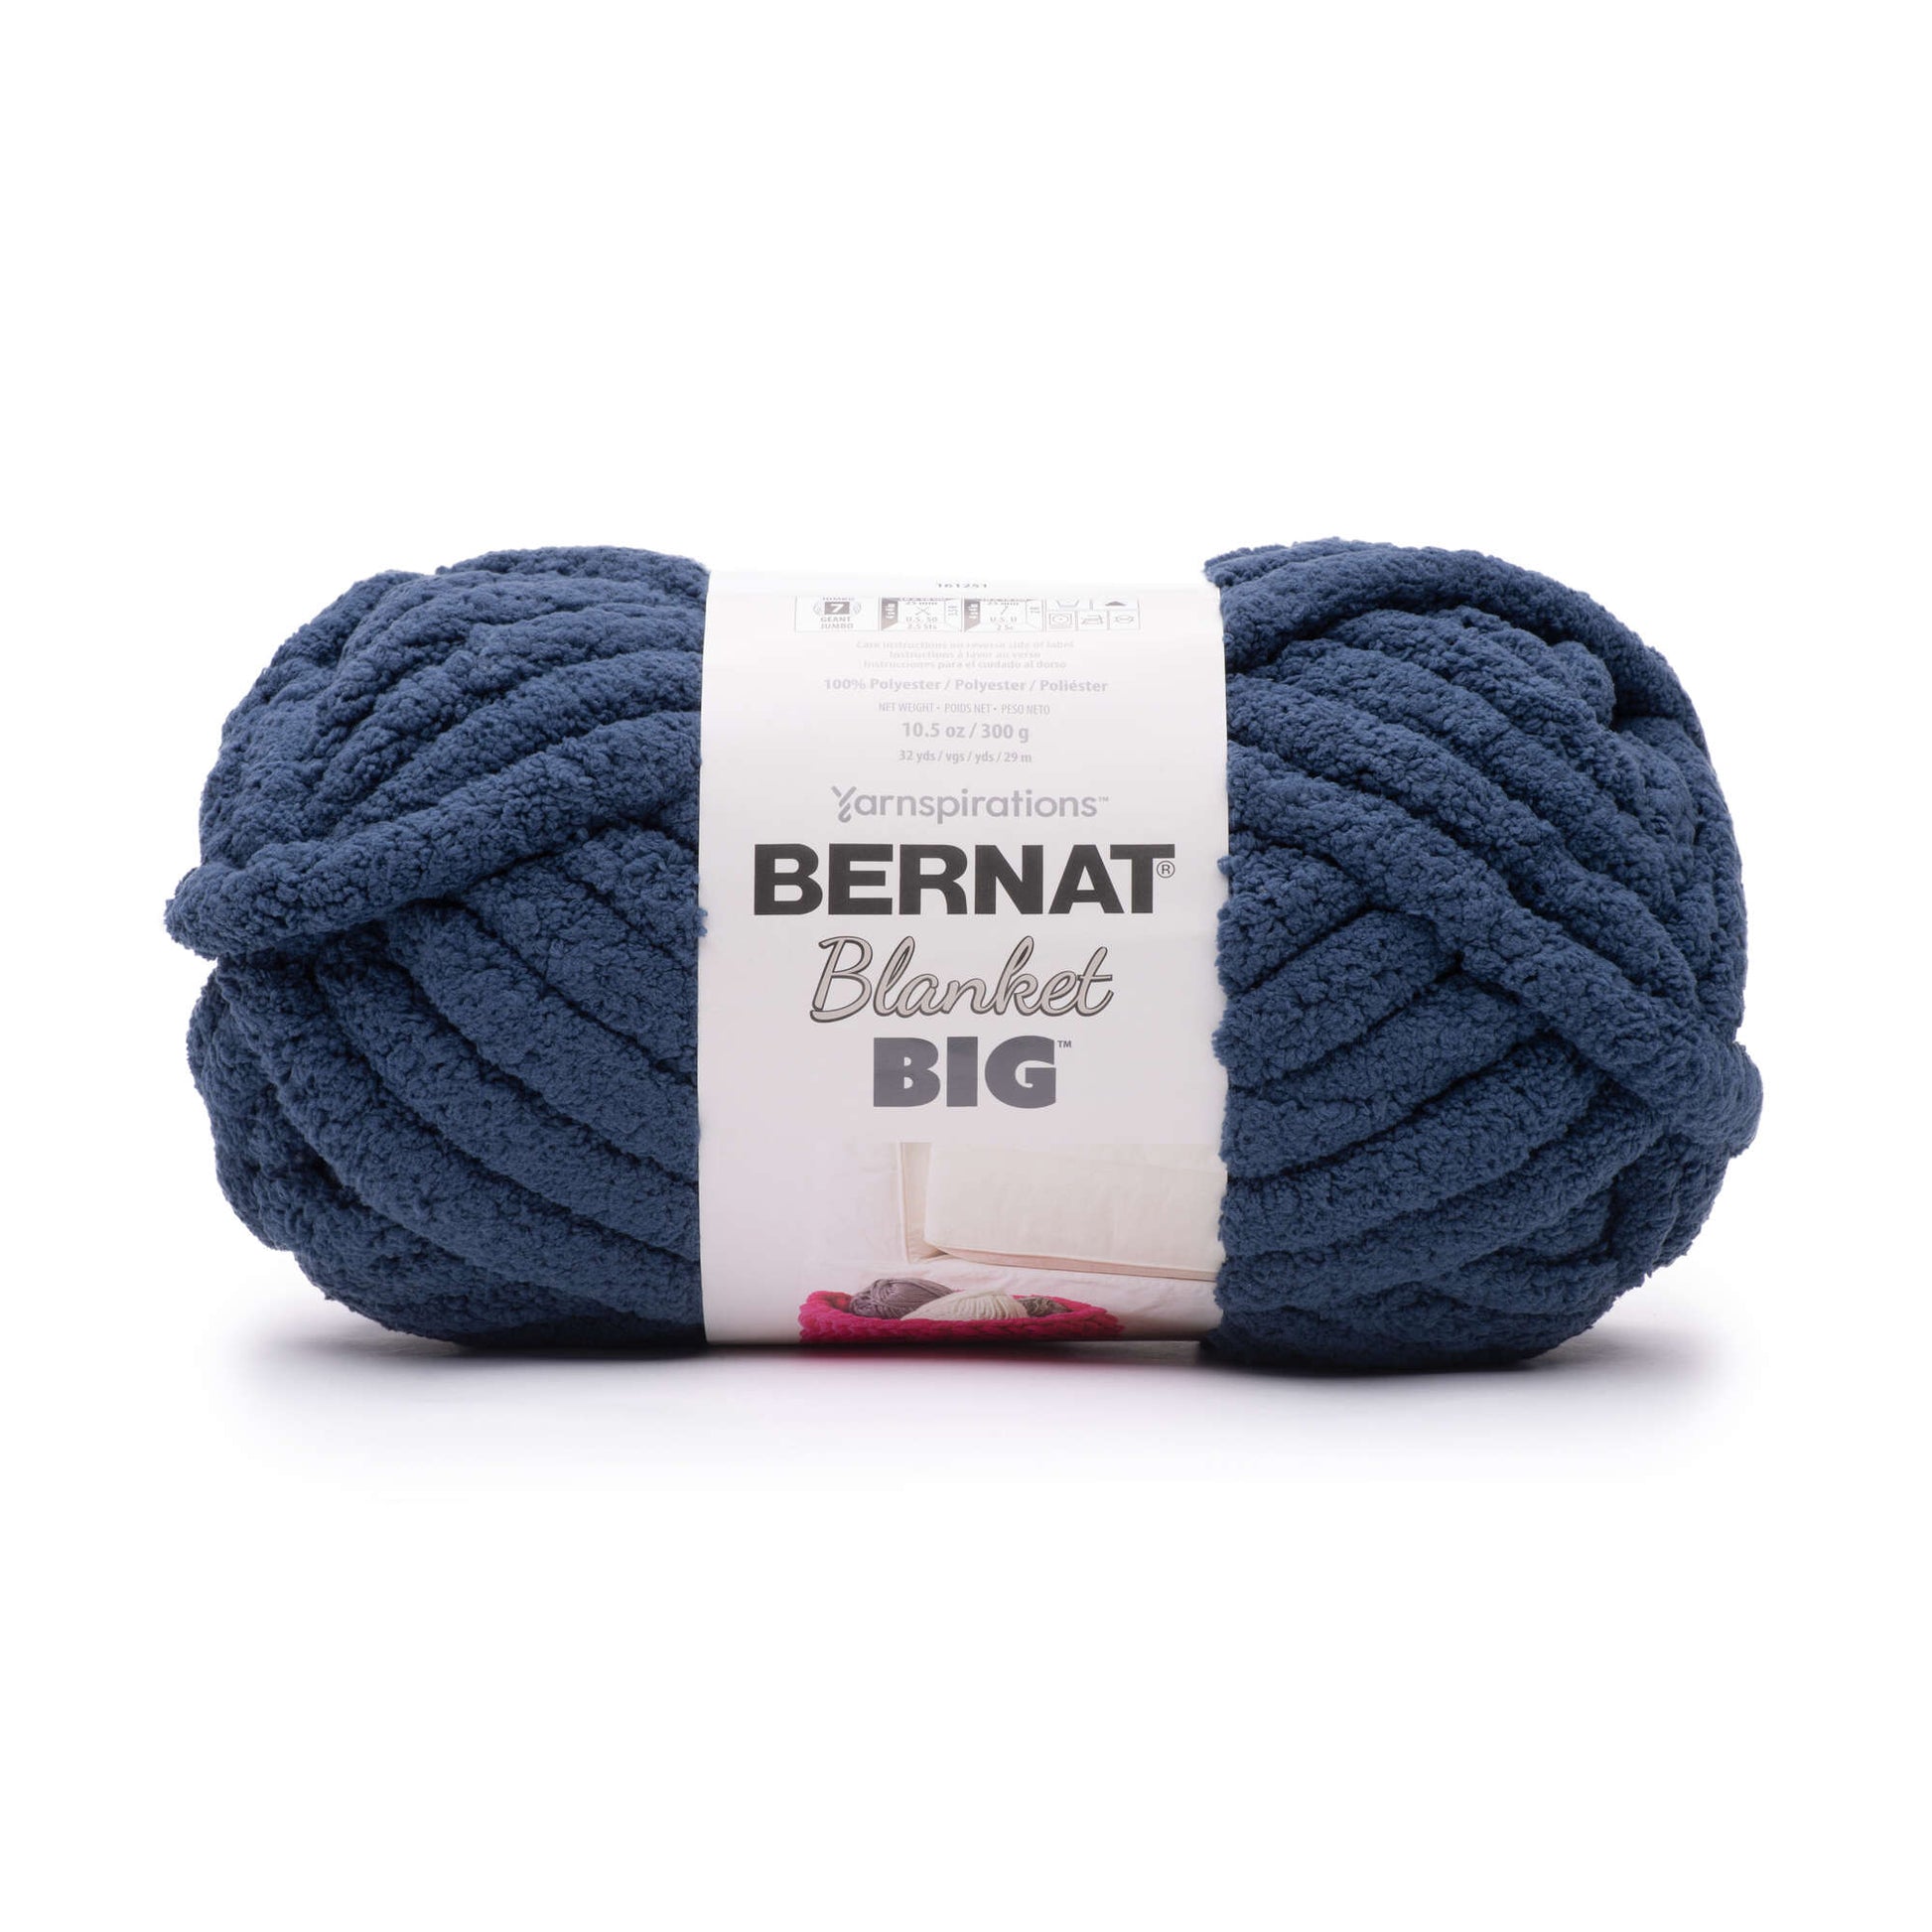 Bernat Blanket Big Yarn (300g/10.5oz) Navy